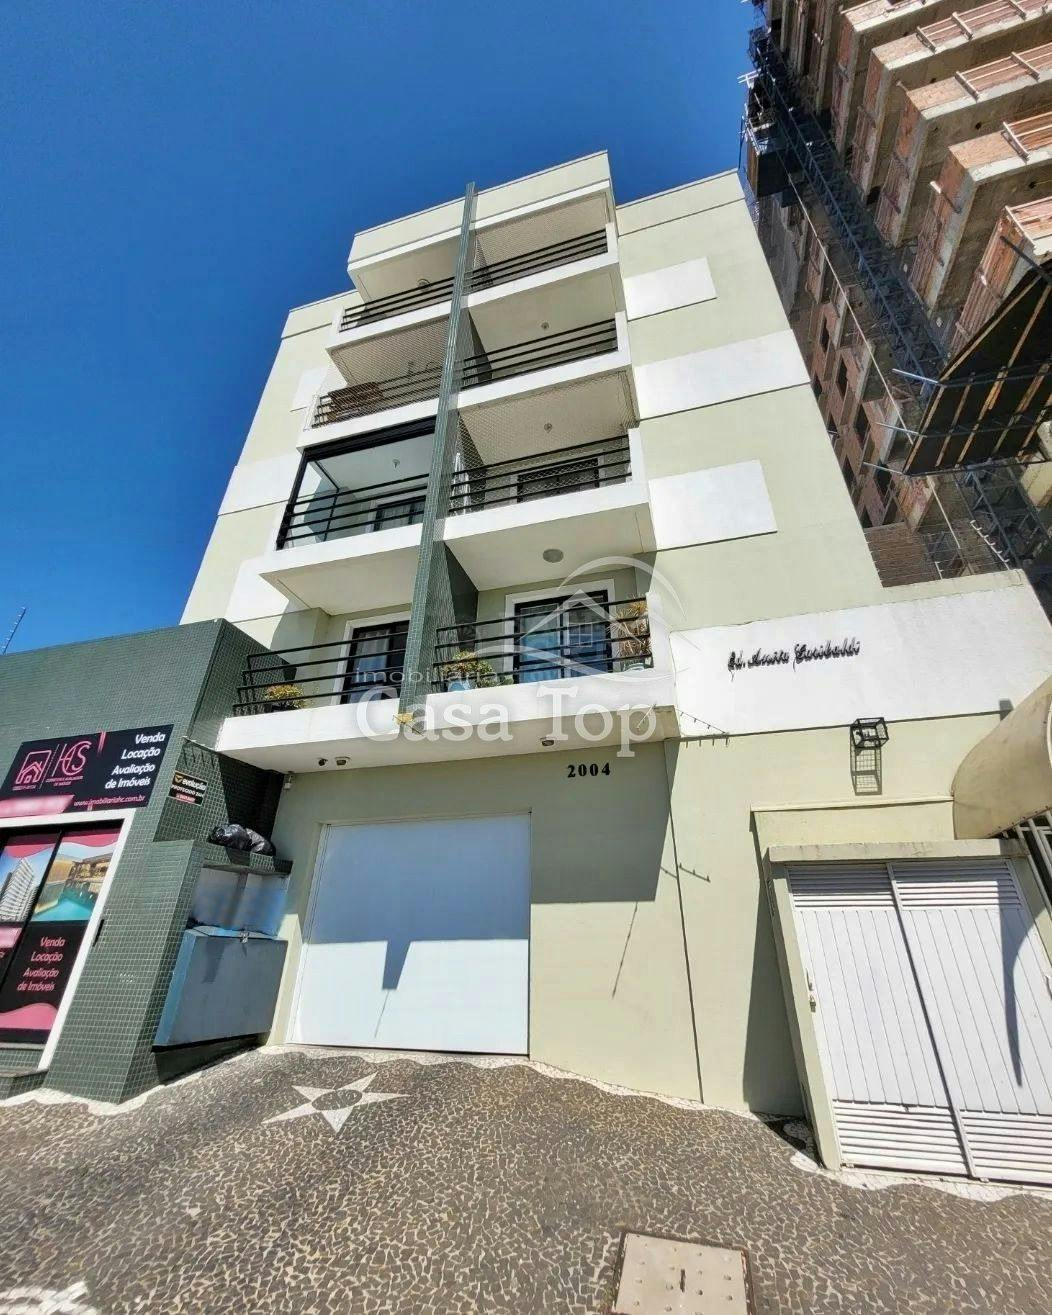 Apartamento semimobiliado à venda Edifício Anita Garibaldi - Órfãs 